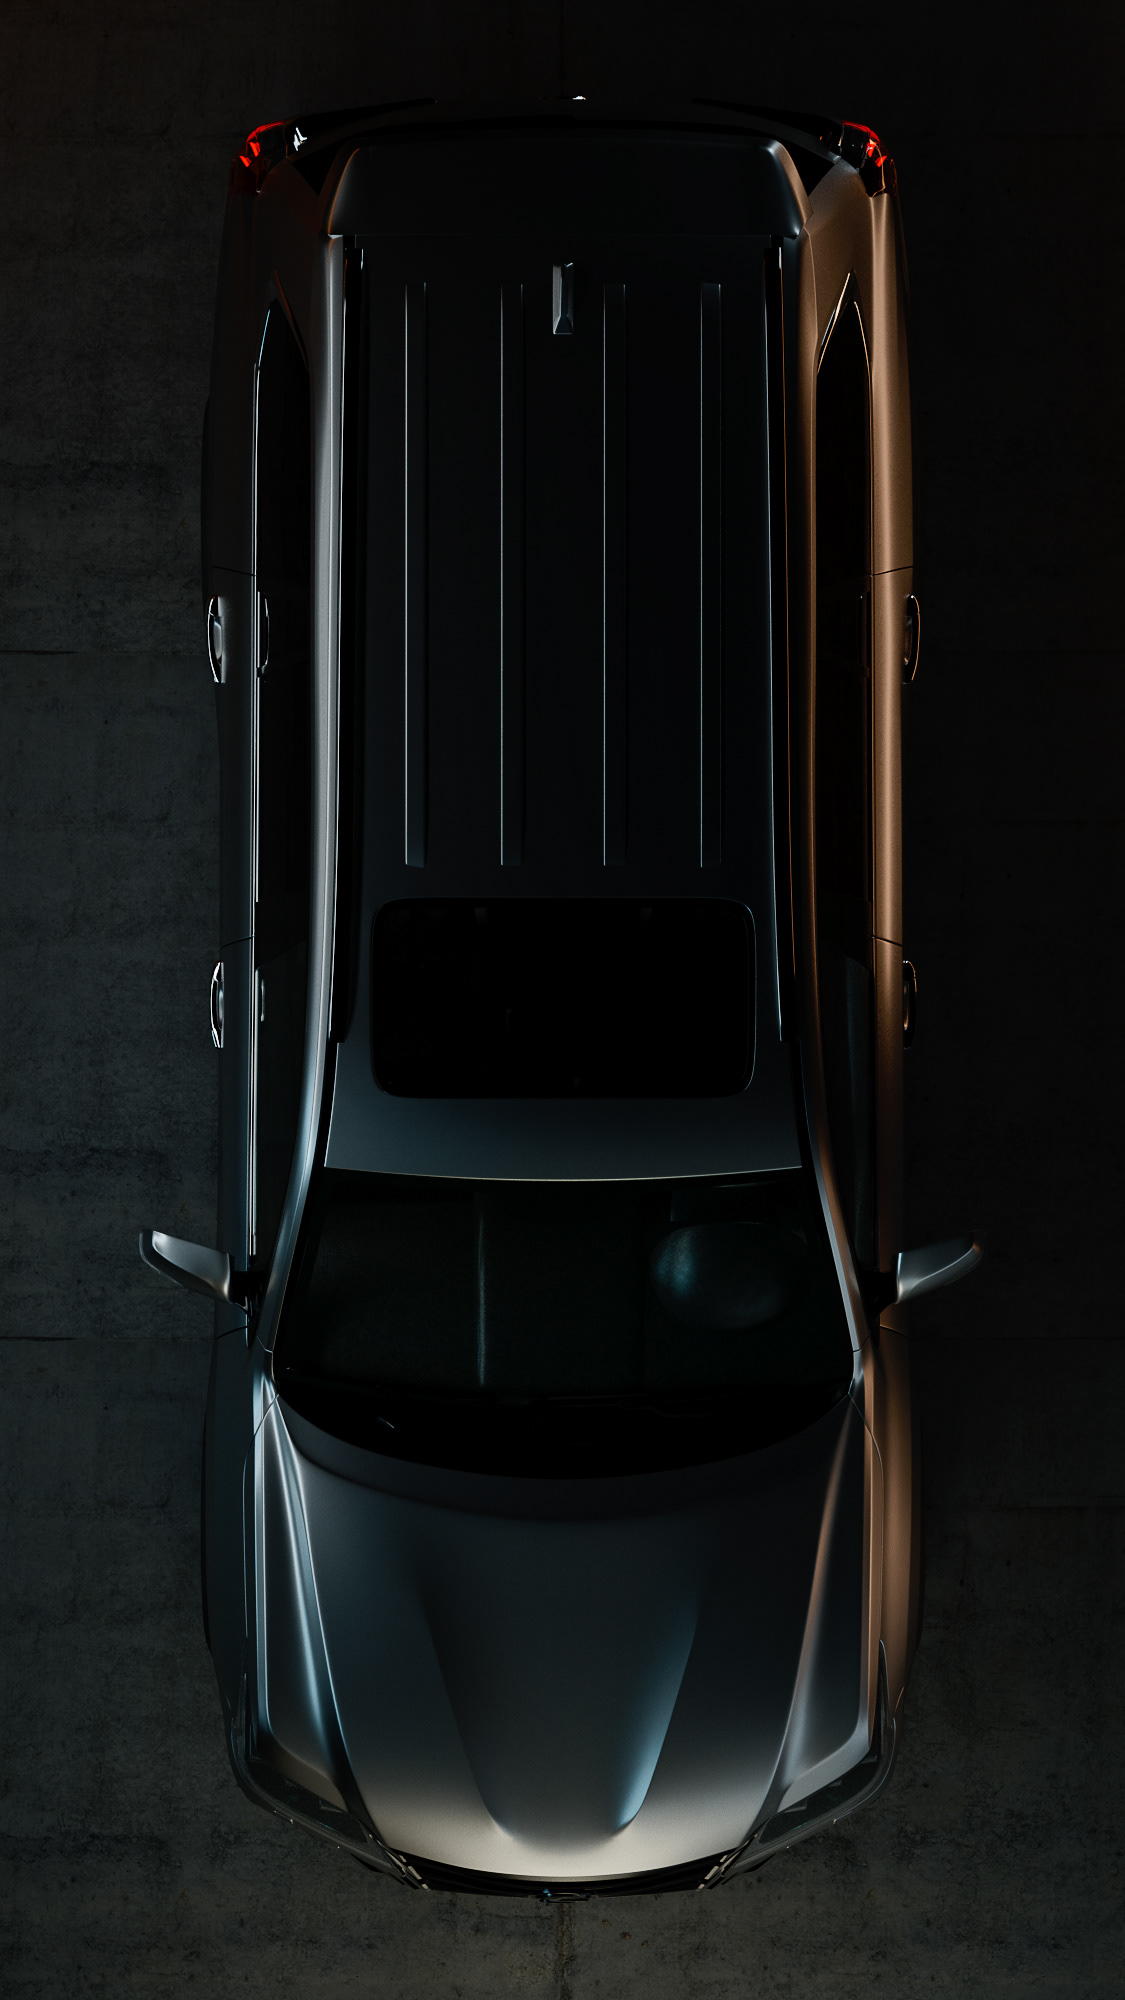 3dsmax car rendering CGI corona render  FStorm Lexus professional lighting studio lighting Studio Photography visualization